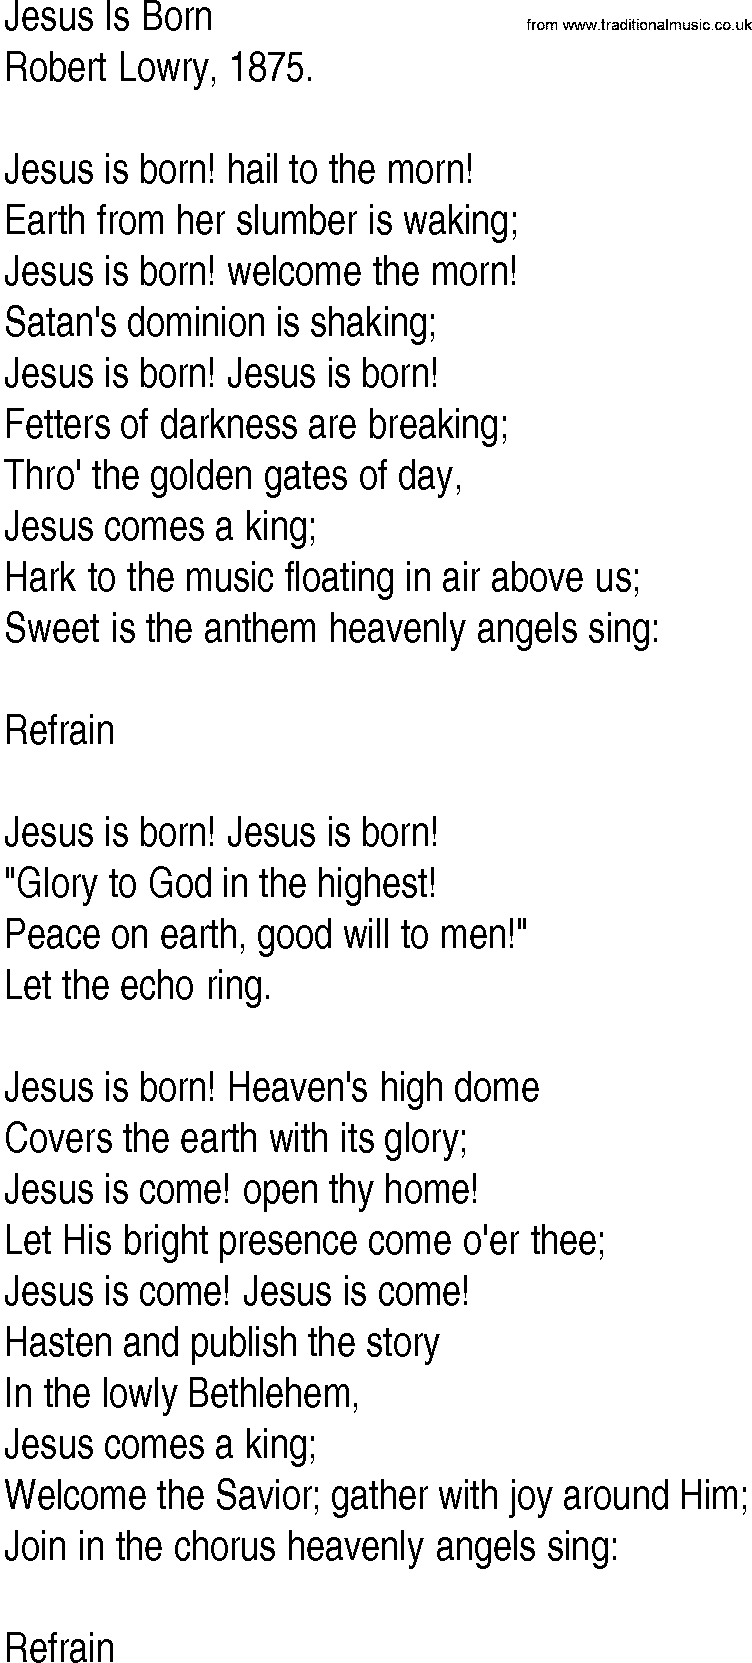 Hymn and Gospel Song: Jesus Is Born by Robert Lowry lyrics